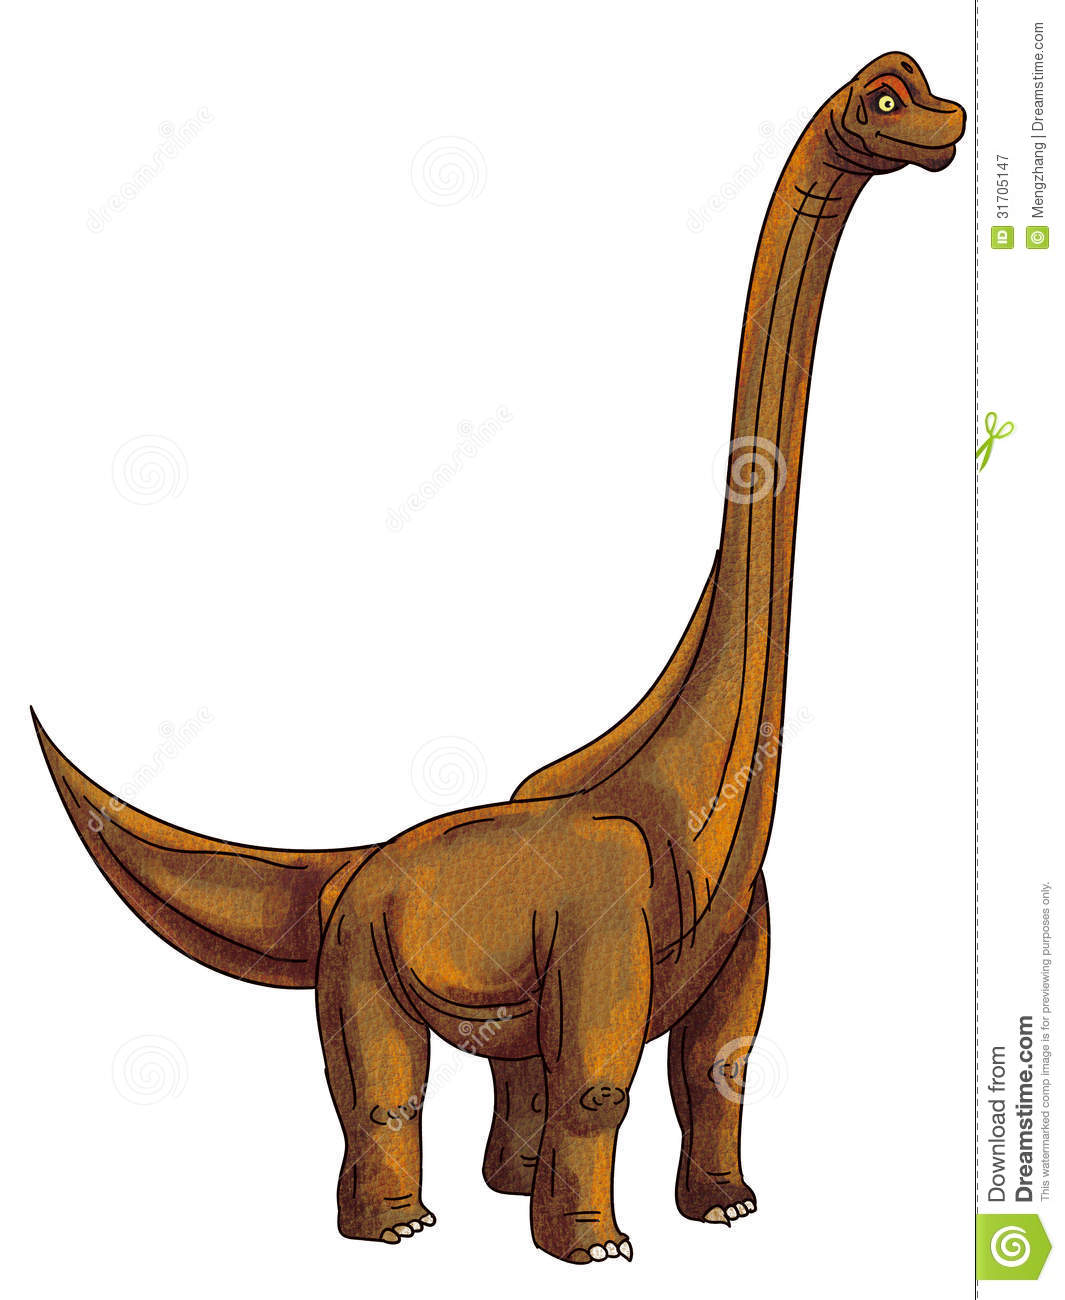 Dinosaur Ultrasaurus Royalty Free Stock Photography   Image  31705147